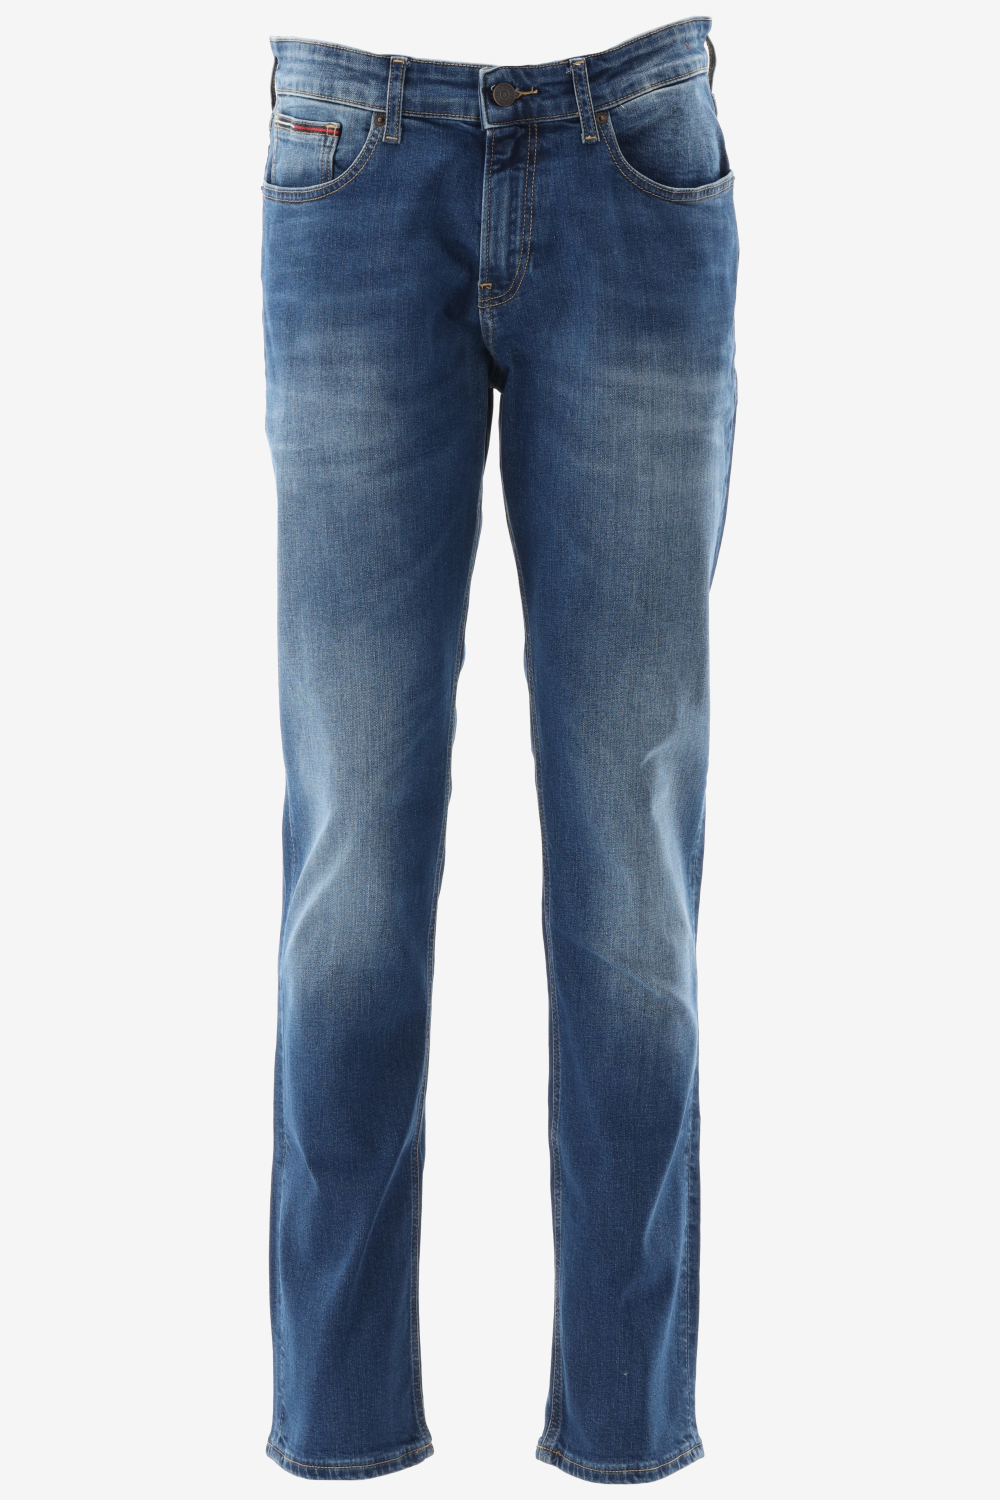 Tommy hilfiger straight fit ryan straight fit jeans maat 32-L36